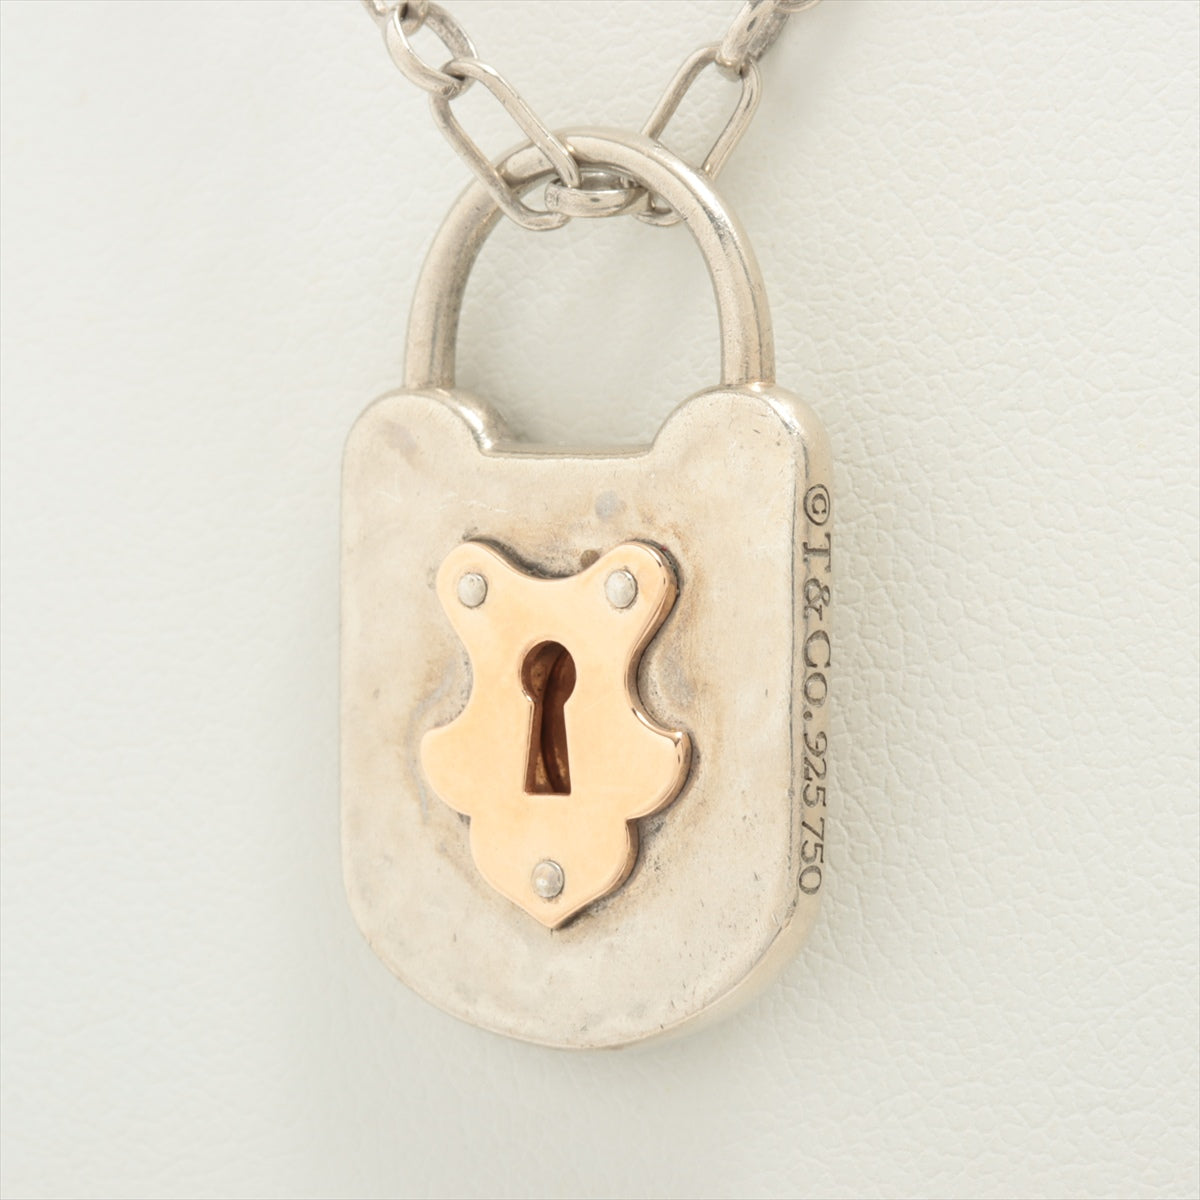 Tiffany & Co. Return to Heart Lock Pendant Necklace 18k Yellow Gold 750 |  eBay